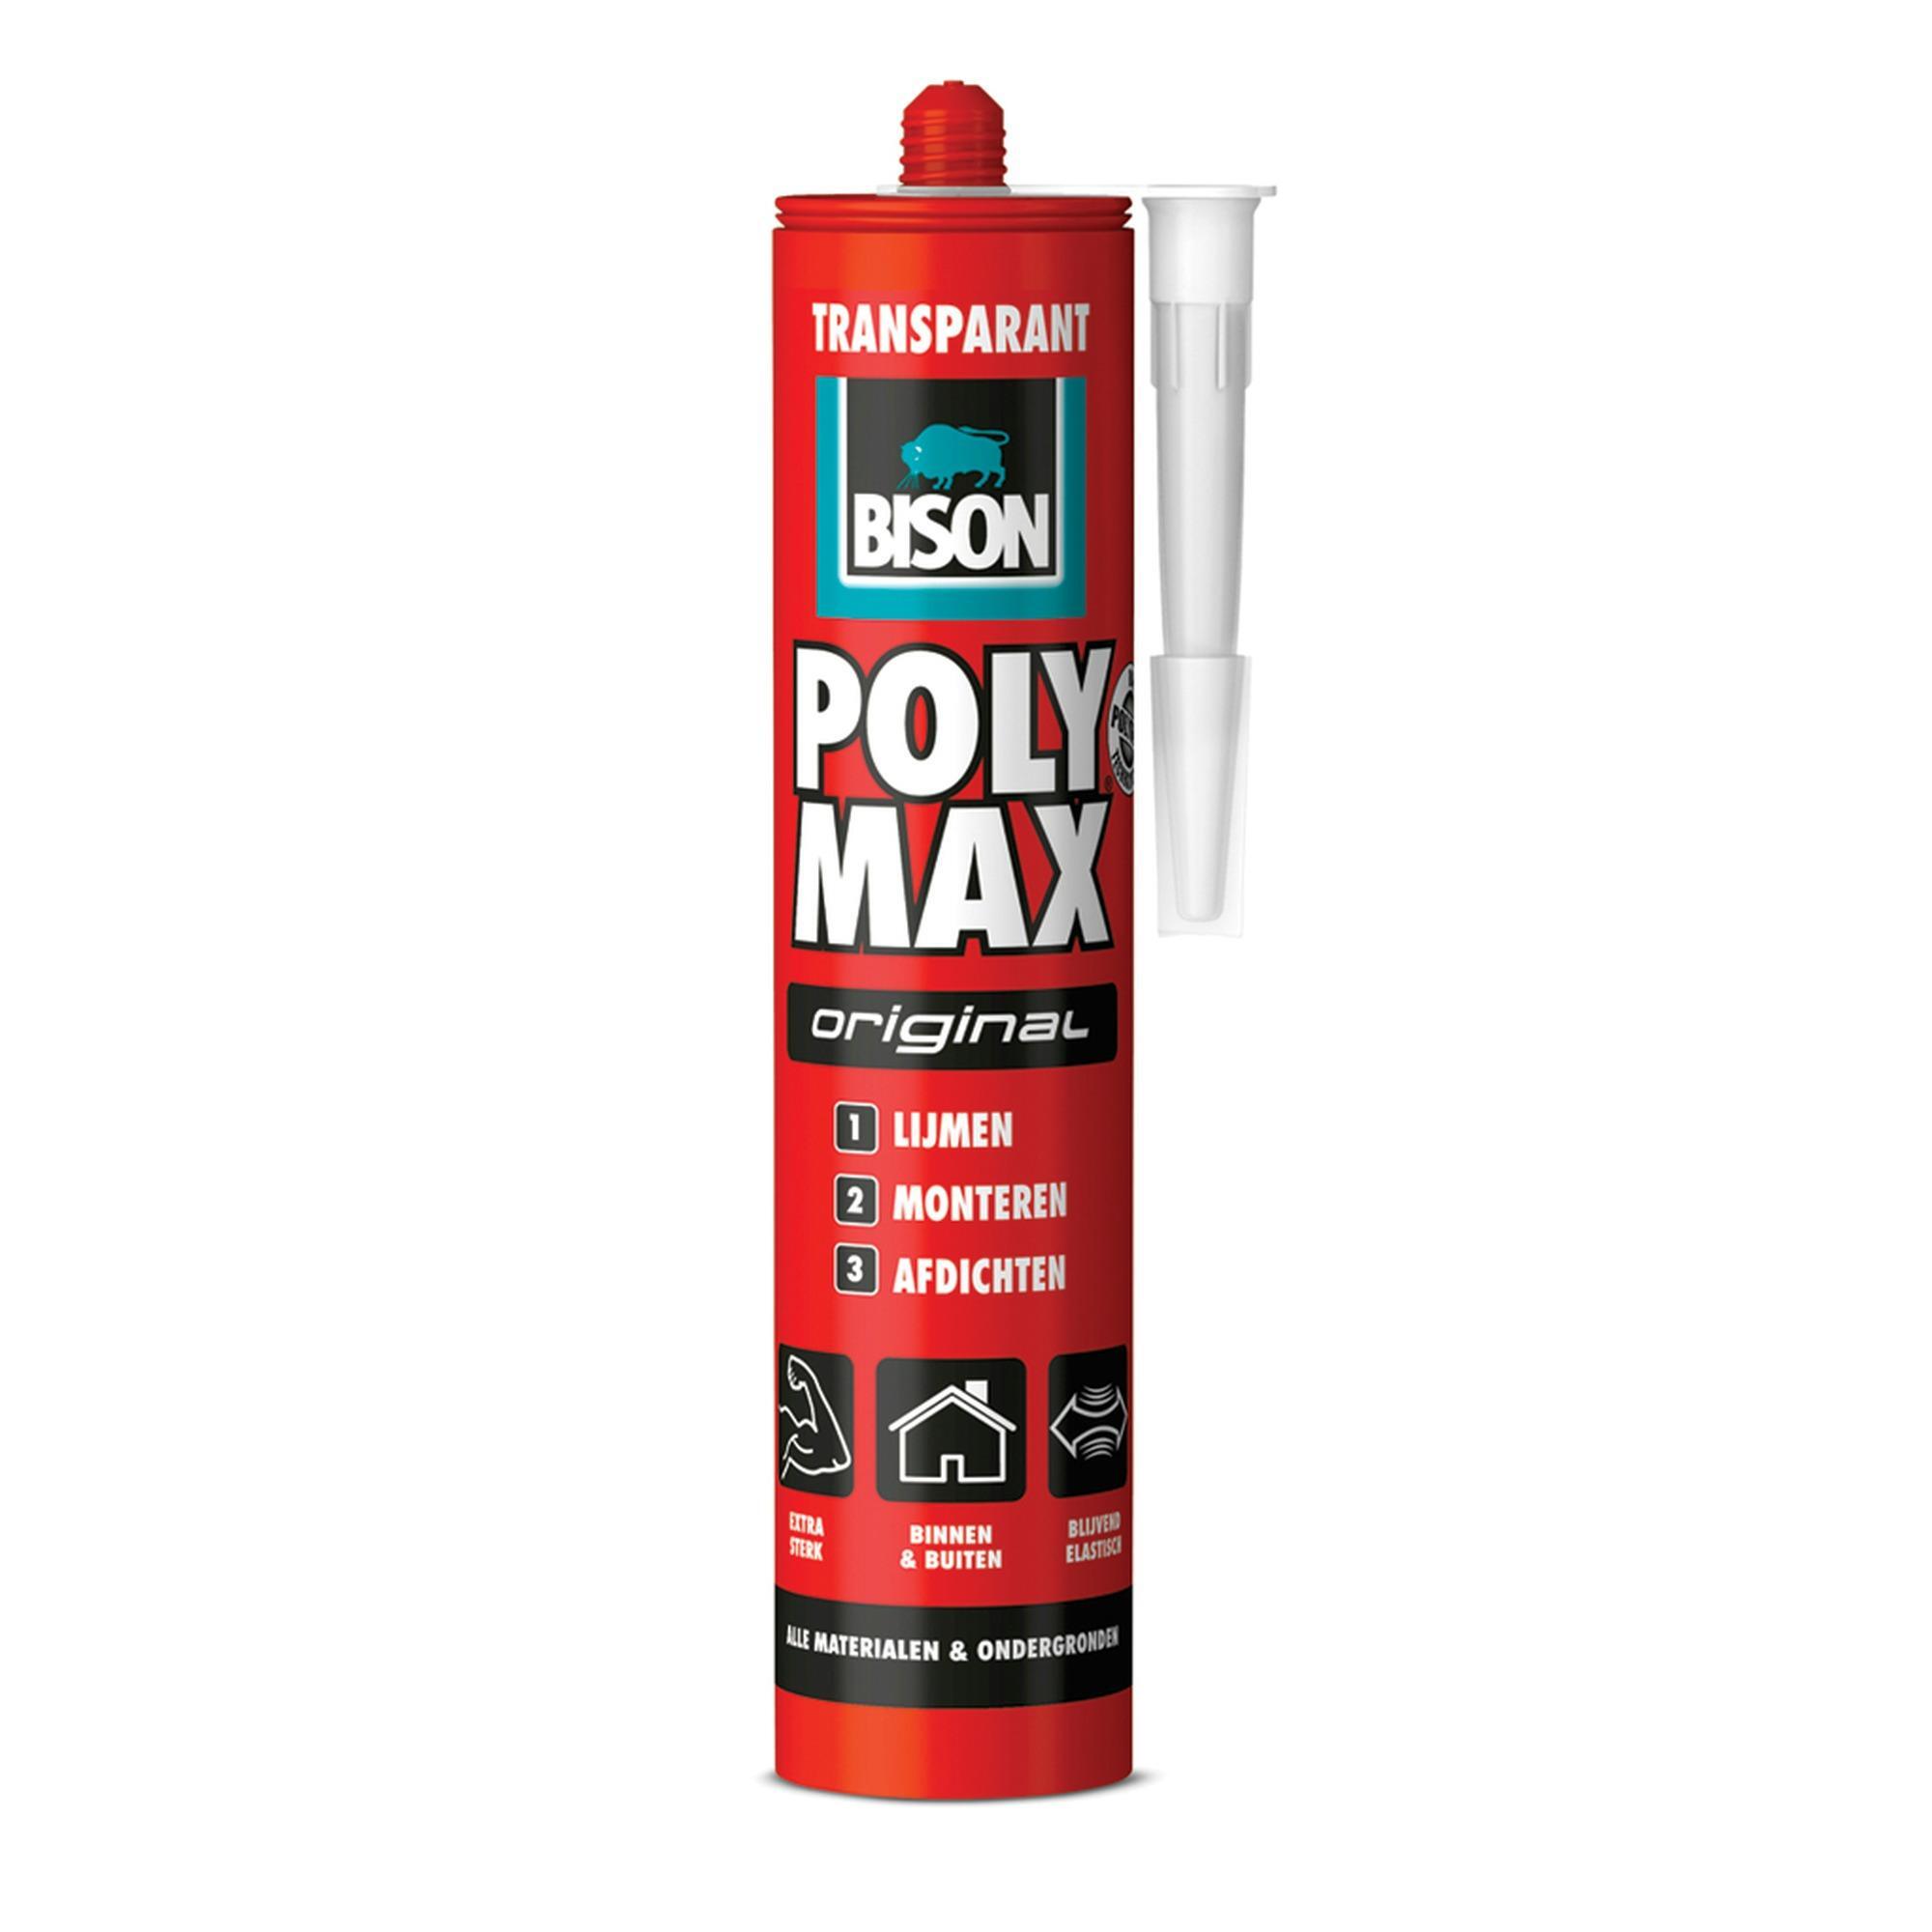 Bison polymax original transparant 300g